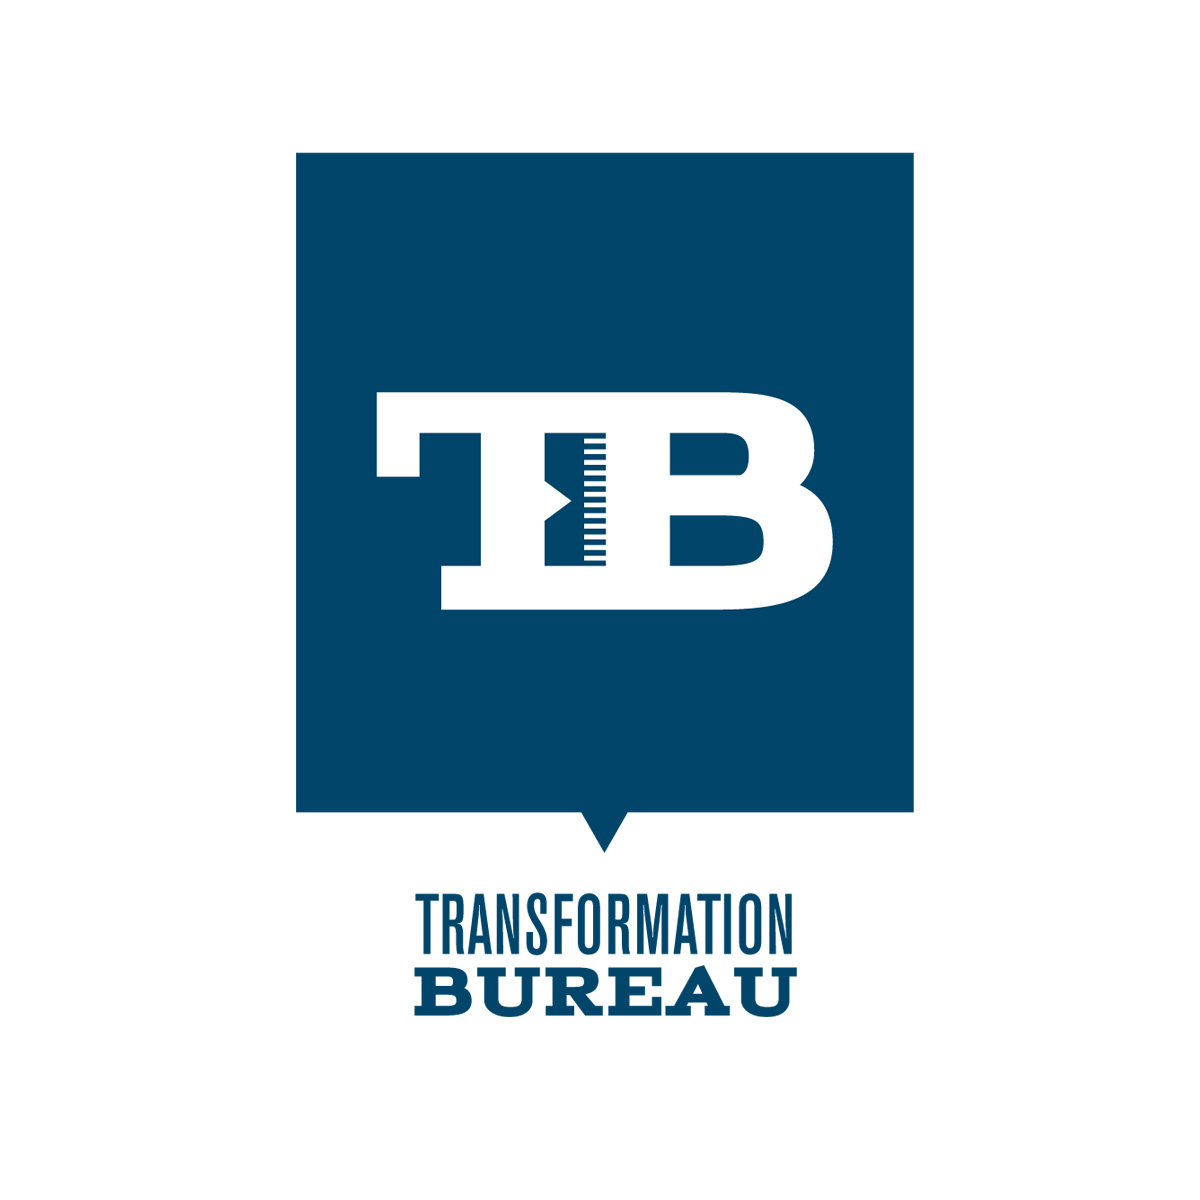 Transformation Bureau typographic logo